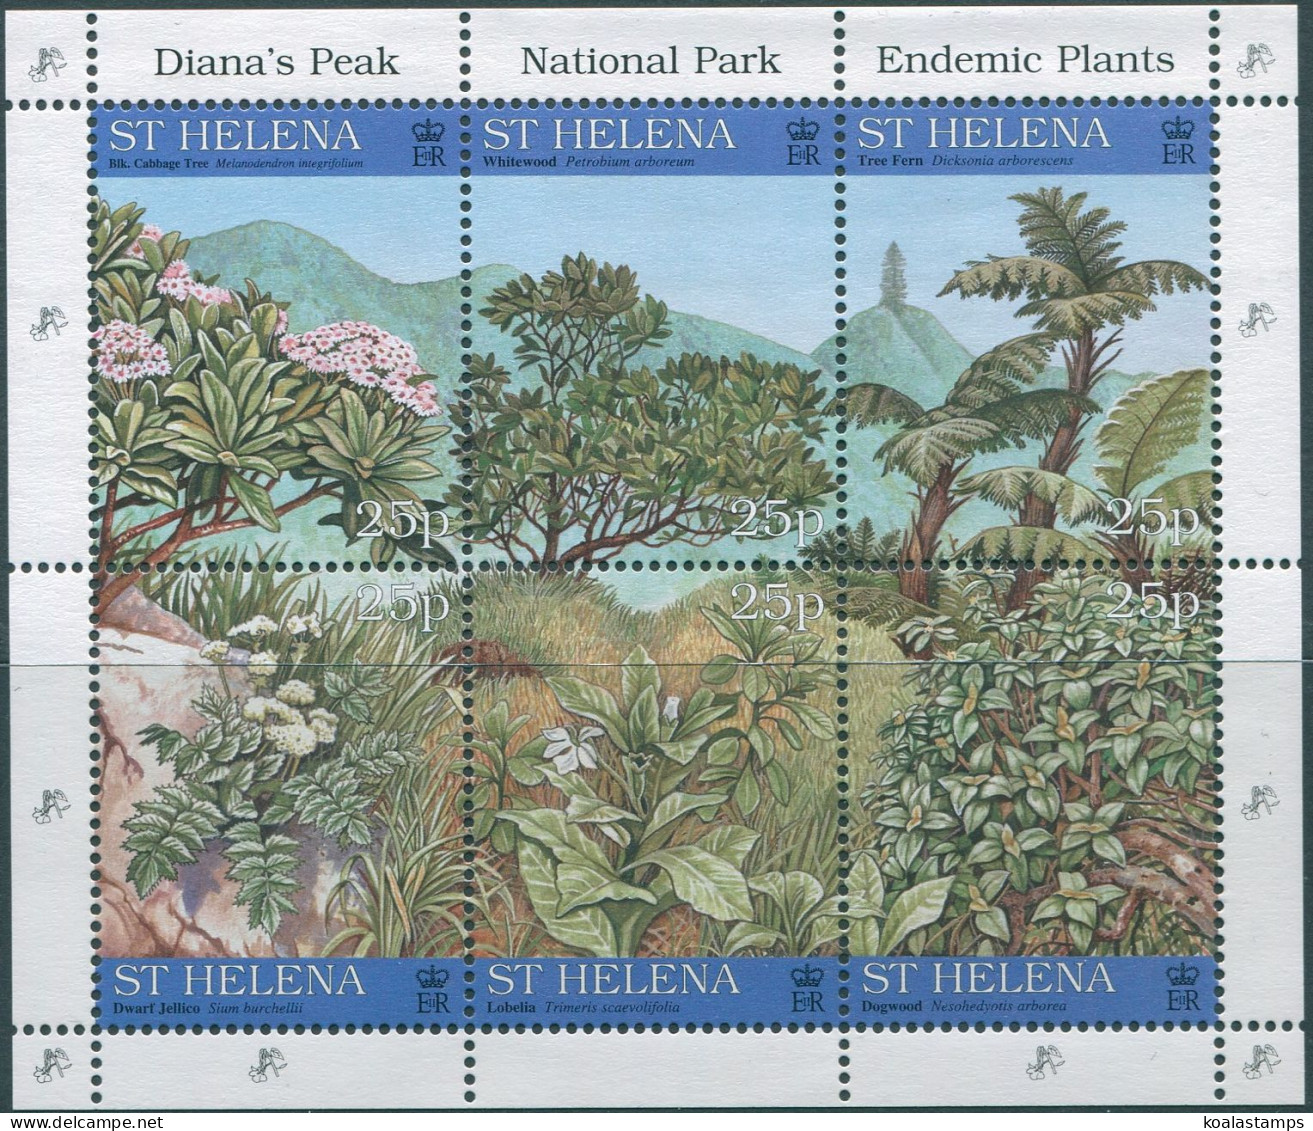 St Helena 1997 SG734-739 Endemic Plants Sheet Set MNH - Saint Helena Island